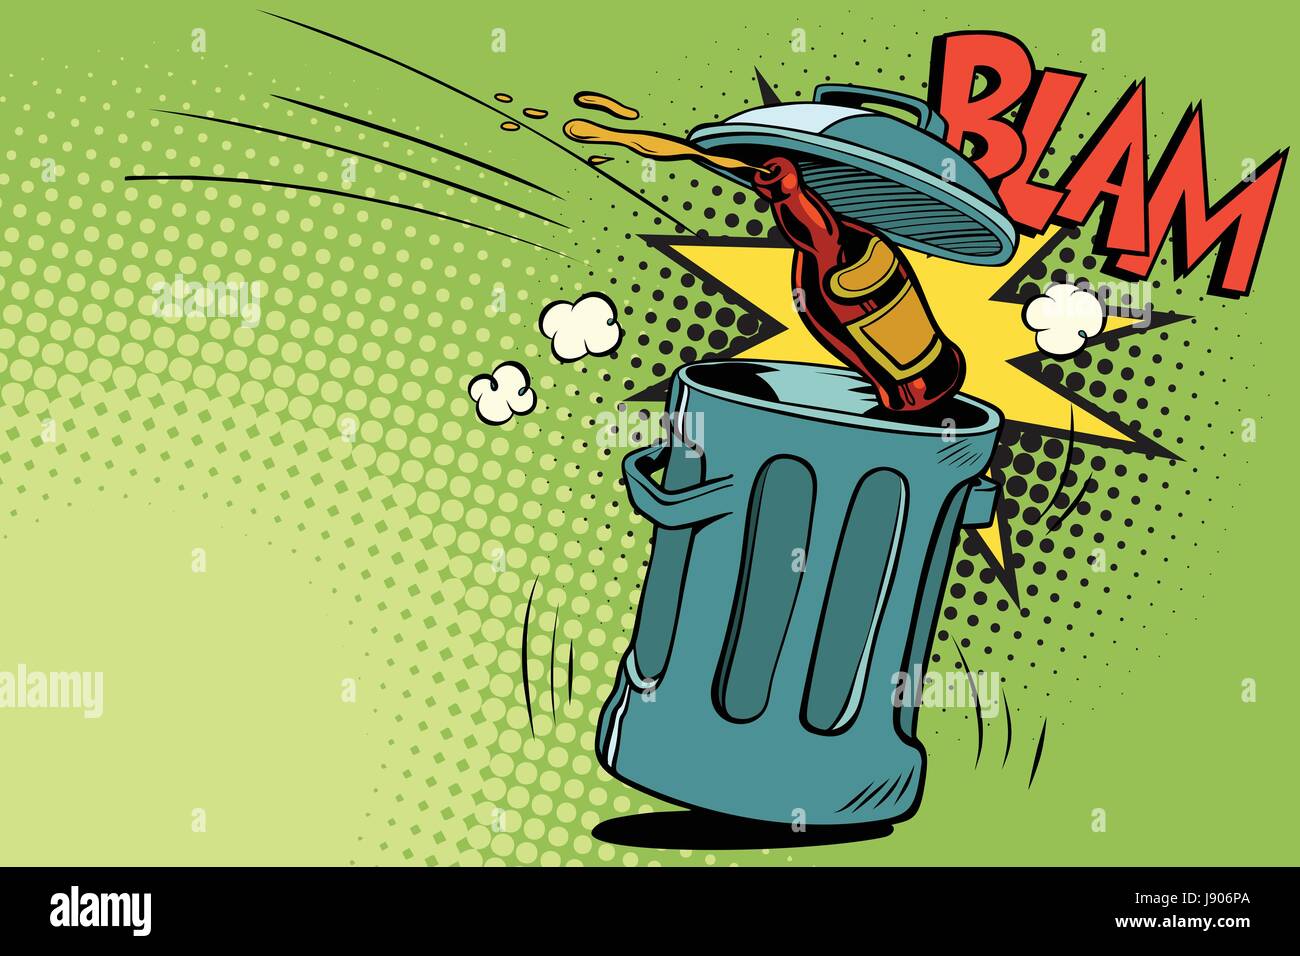 Stop alcohol, beer bottle flies into the garbage. Cartoon comic illustration pop art retro style vector Stock Vector